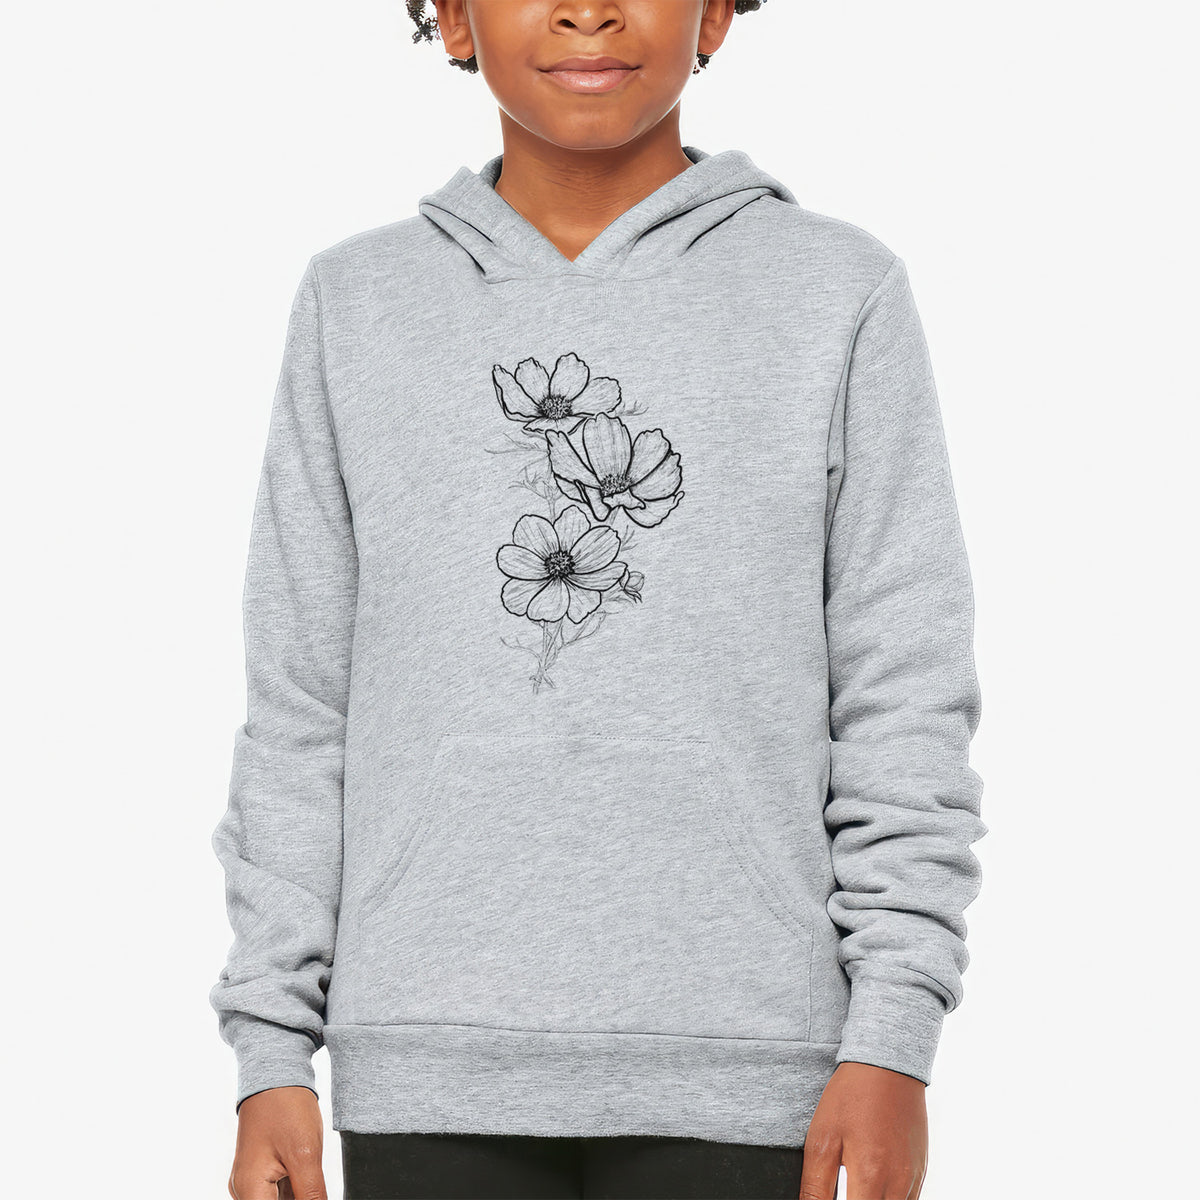 Garden Cosmos - Apollo White Cosmos bipinnatus - Youth Hoodie Sweatshirt